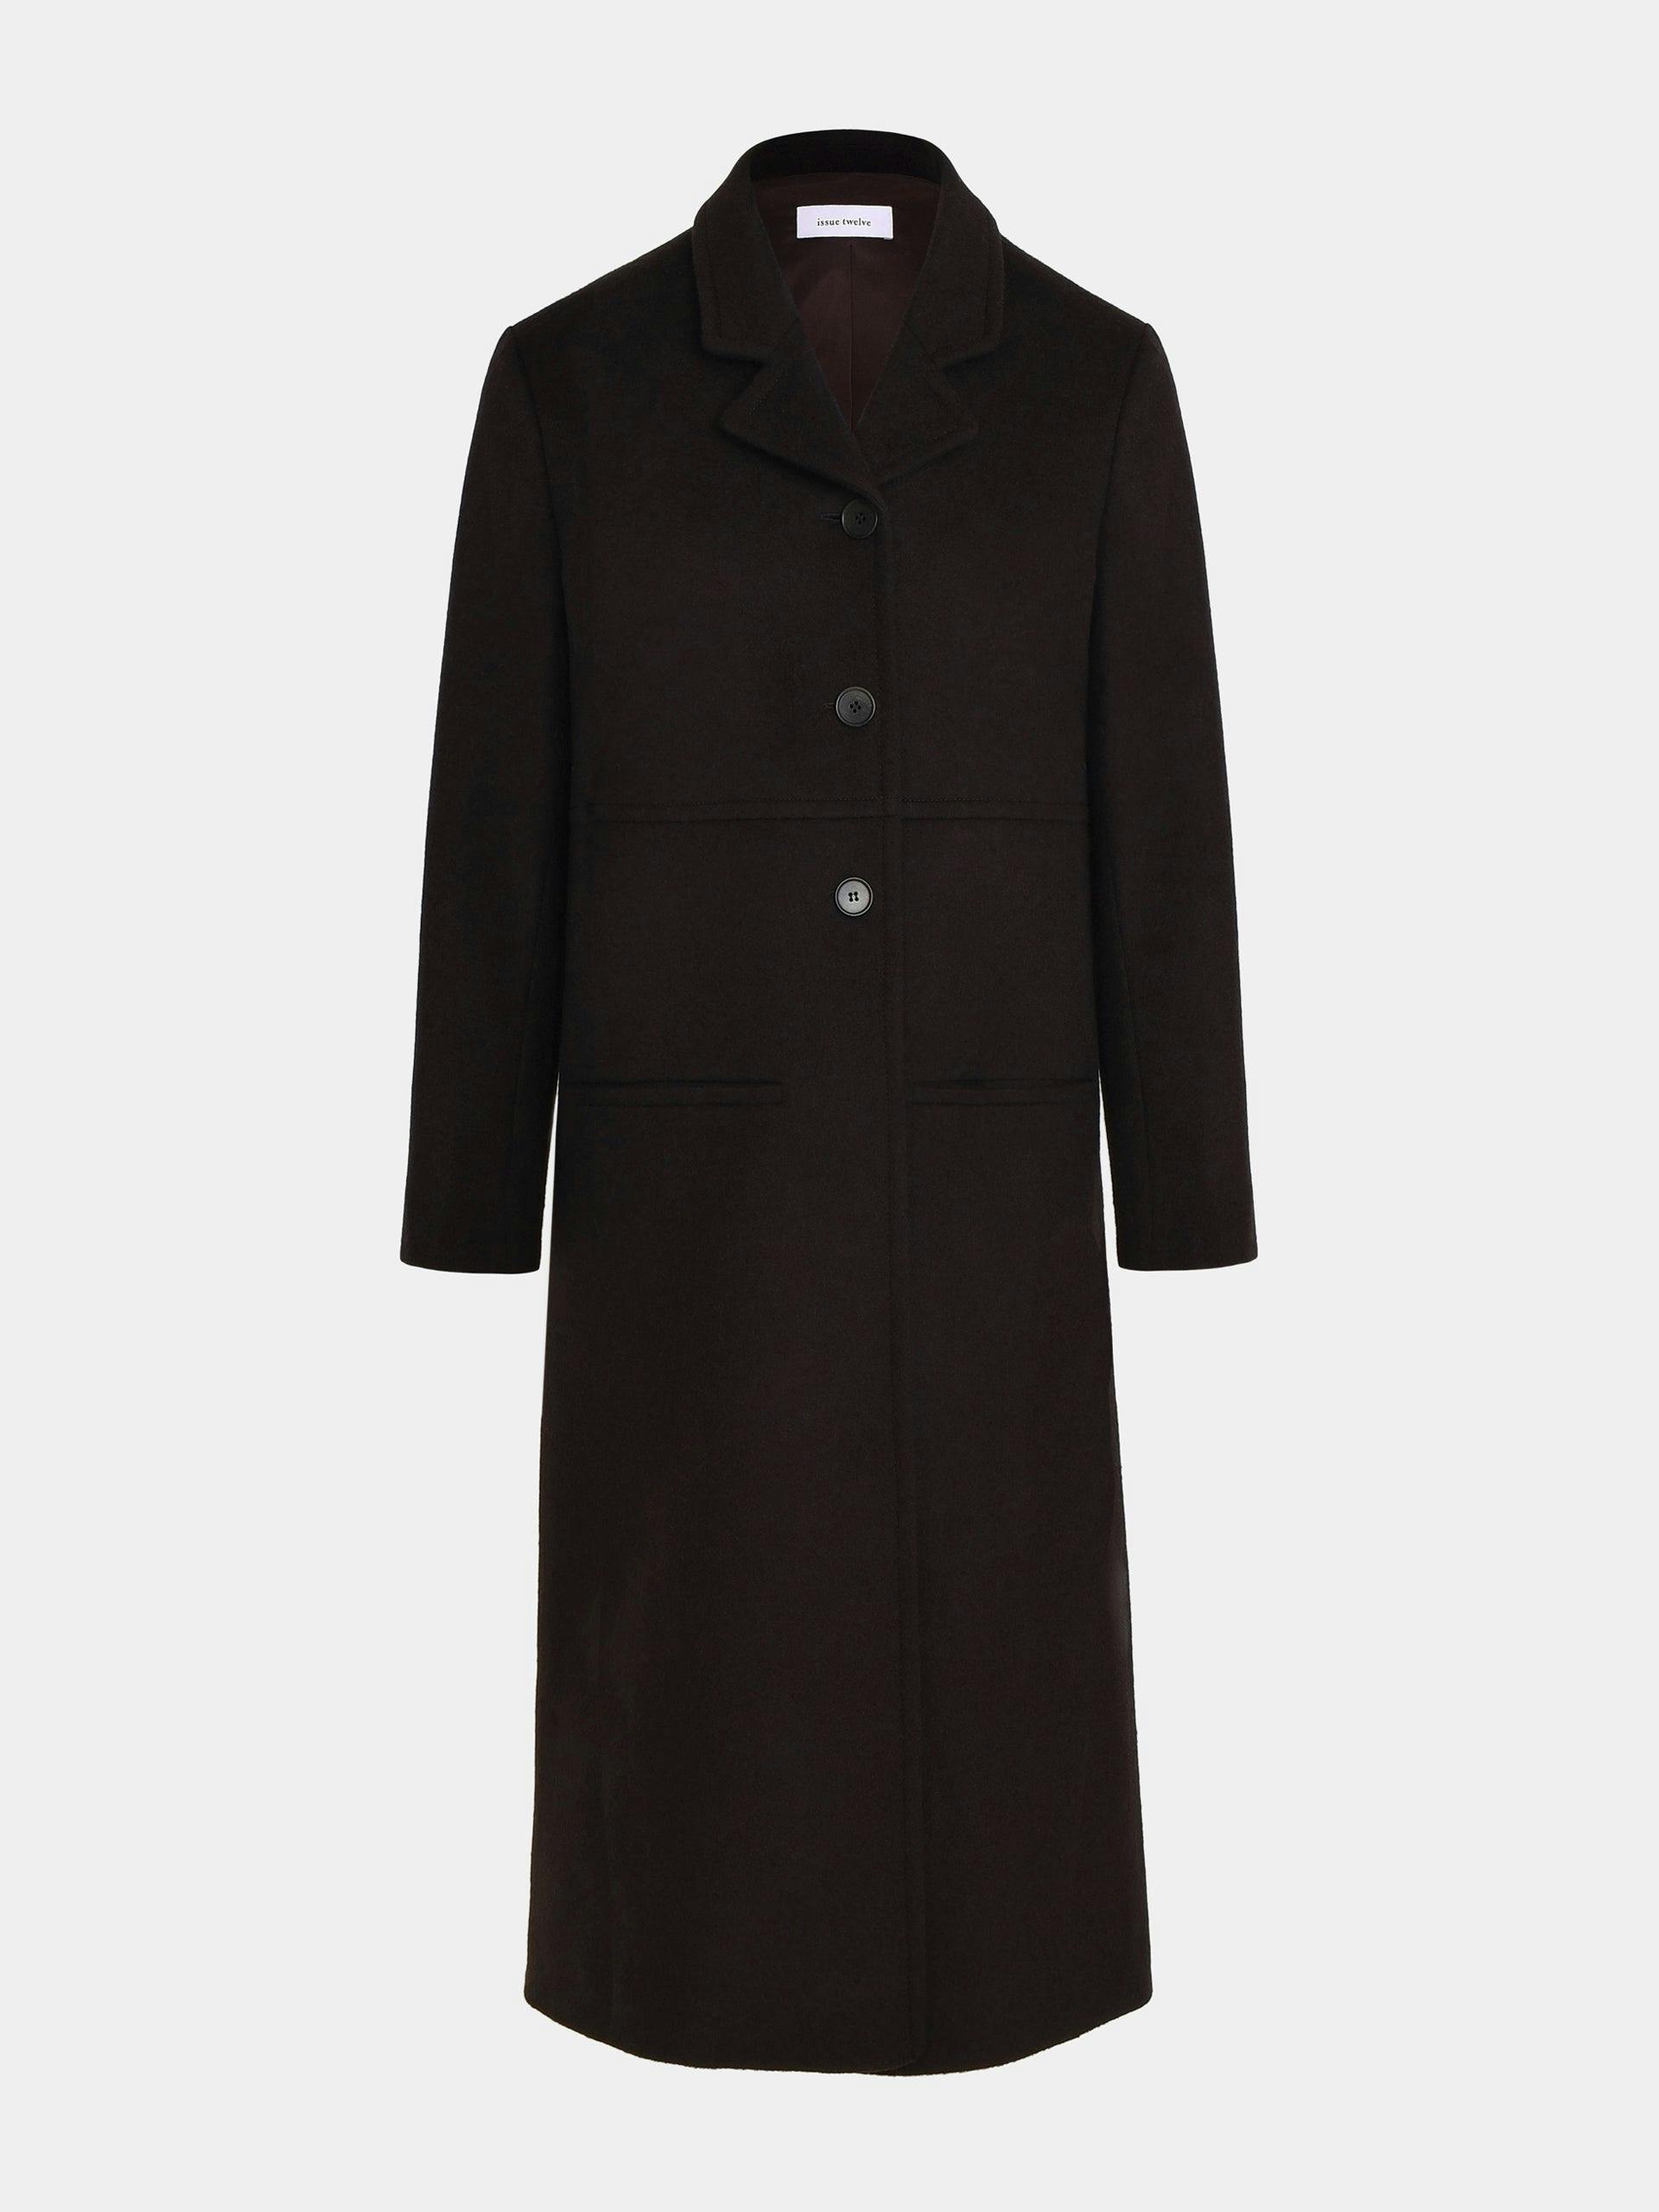 Dark brown wool cashmere Elm coat